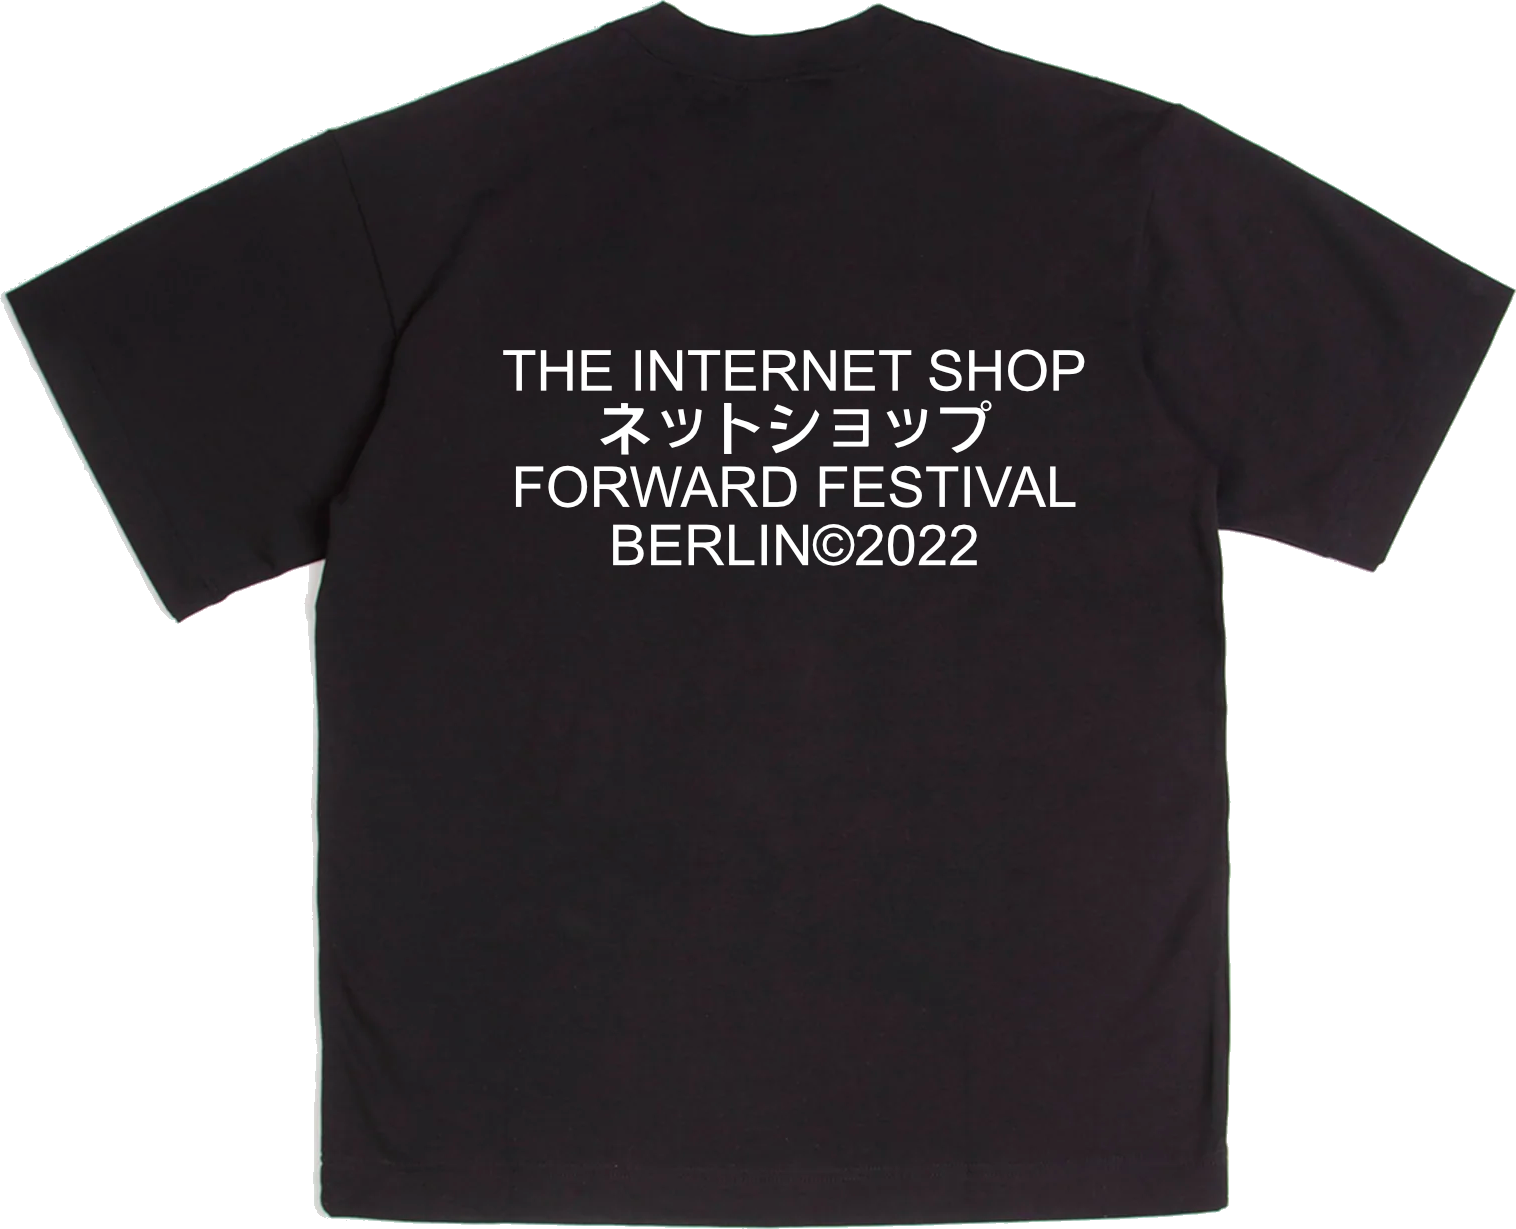 Berlin Crew Shirt